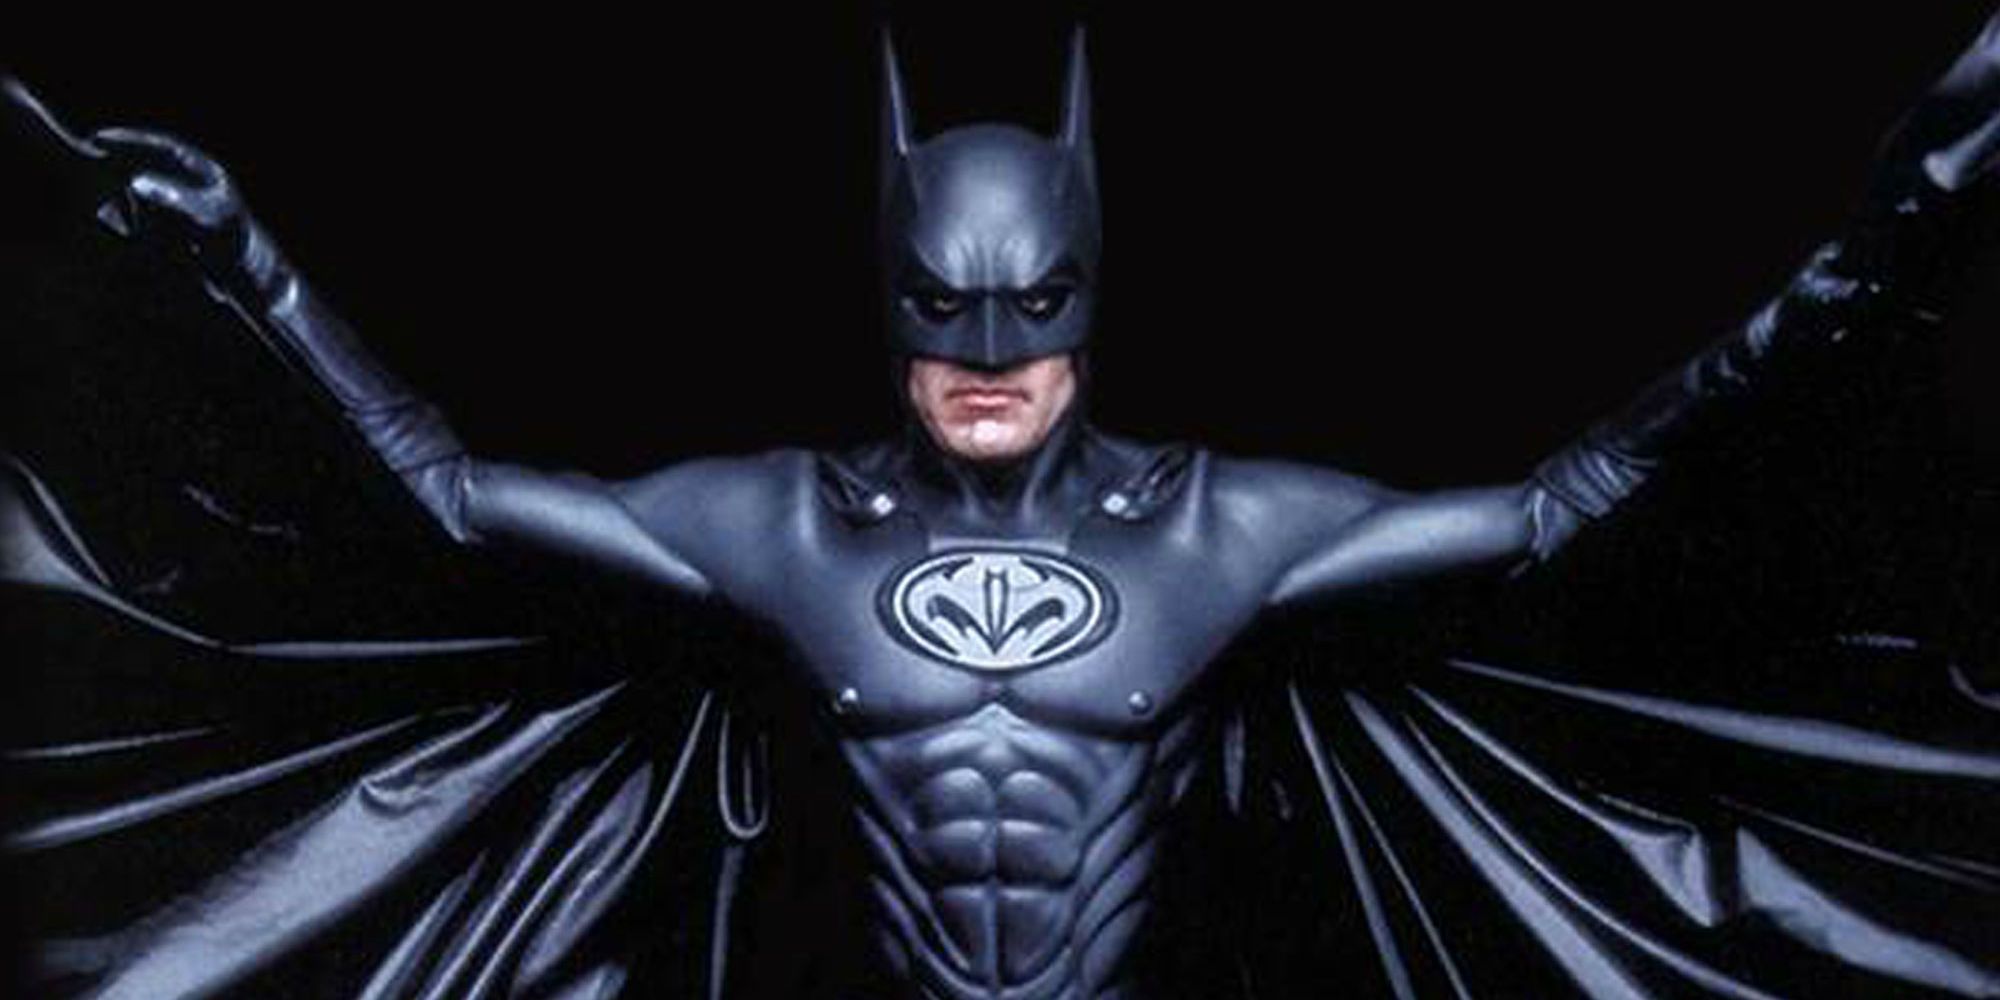 Batman & Robin Had The Biggest Influence On George Clooney's Career2000 x 1000